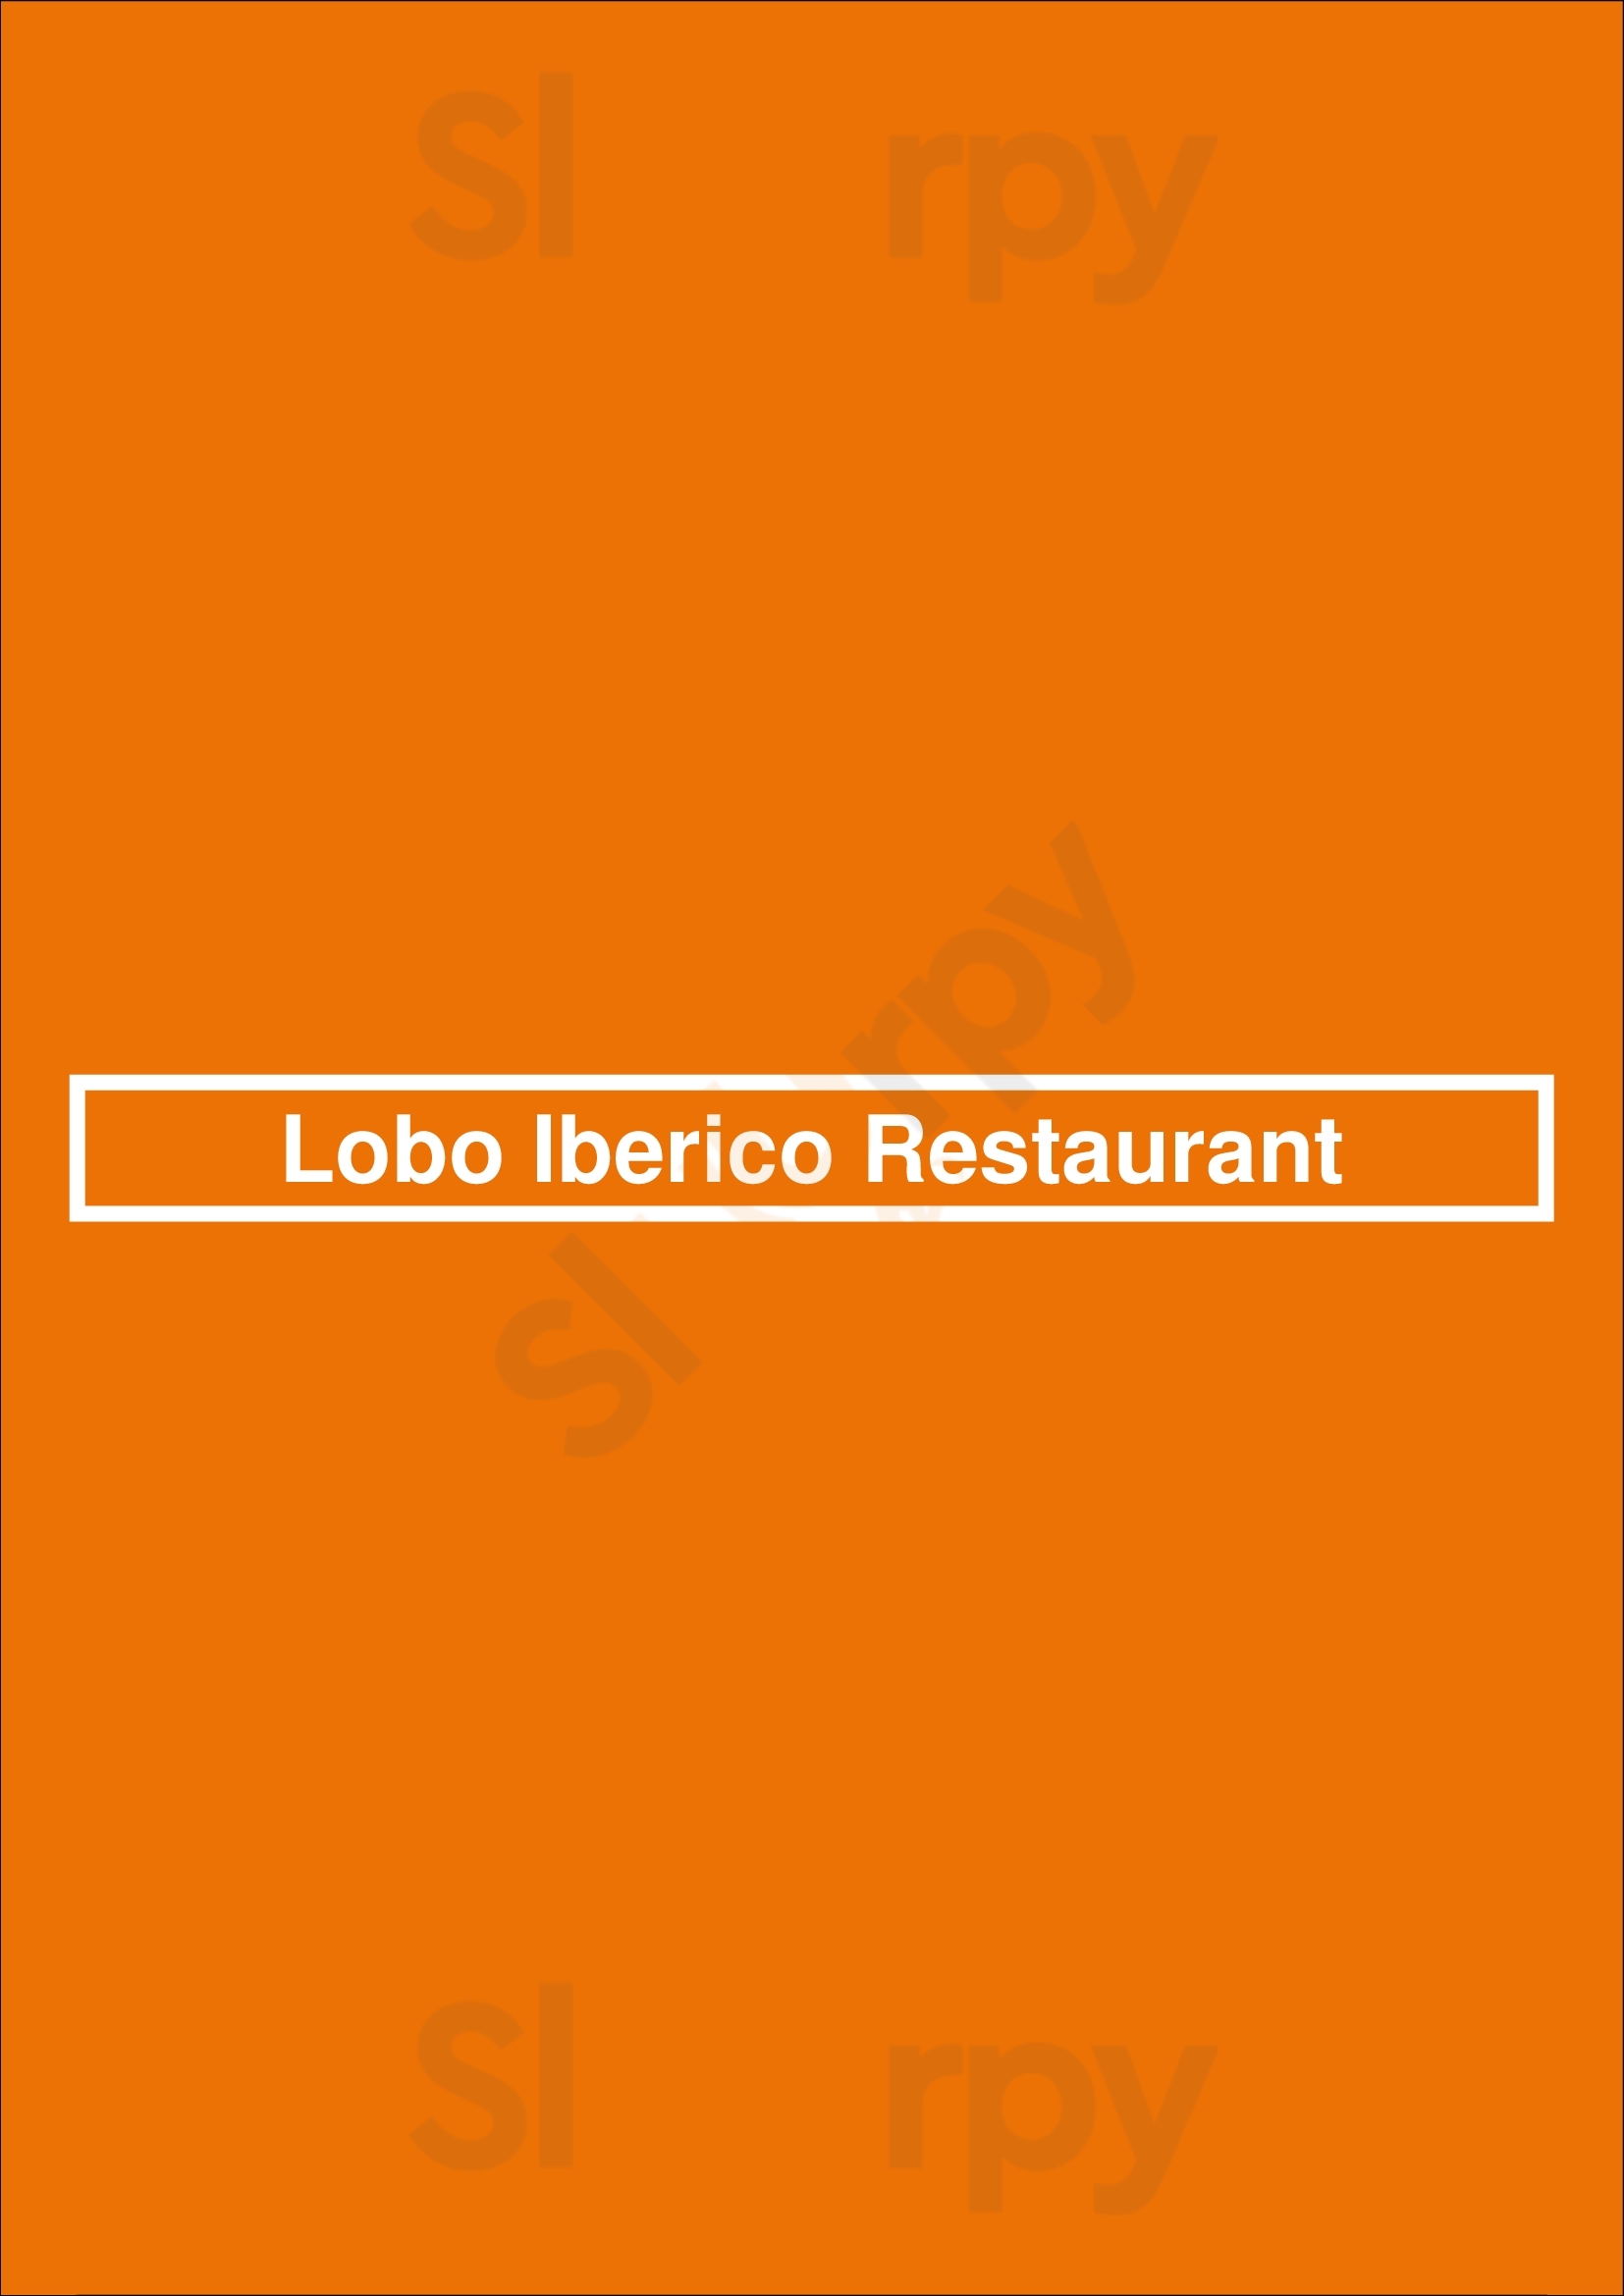 Lobo Iberico Restaurant Newmarket Menu - 1